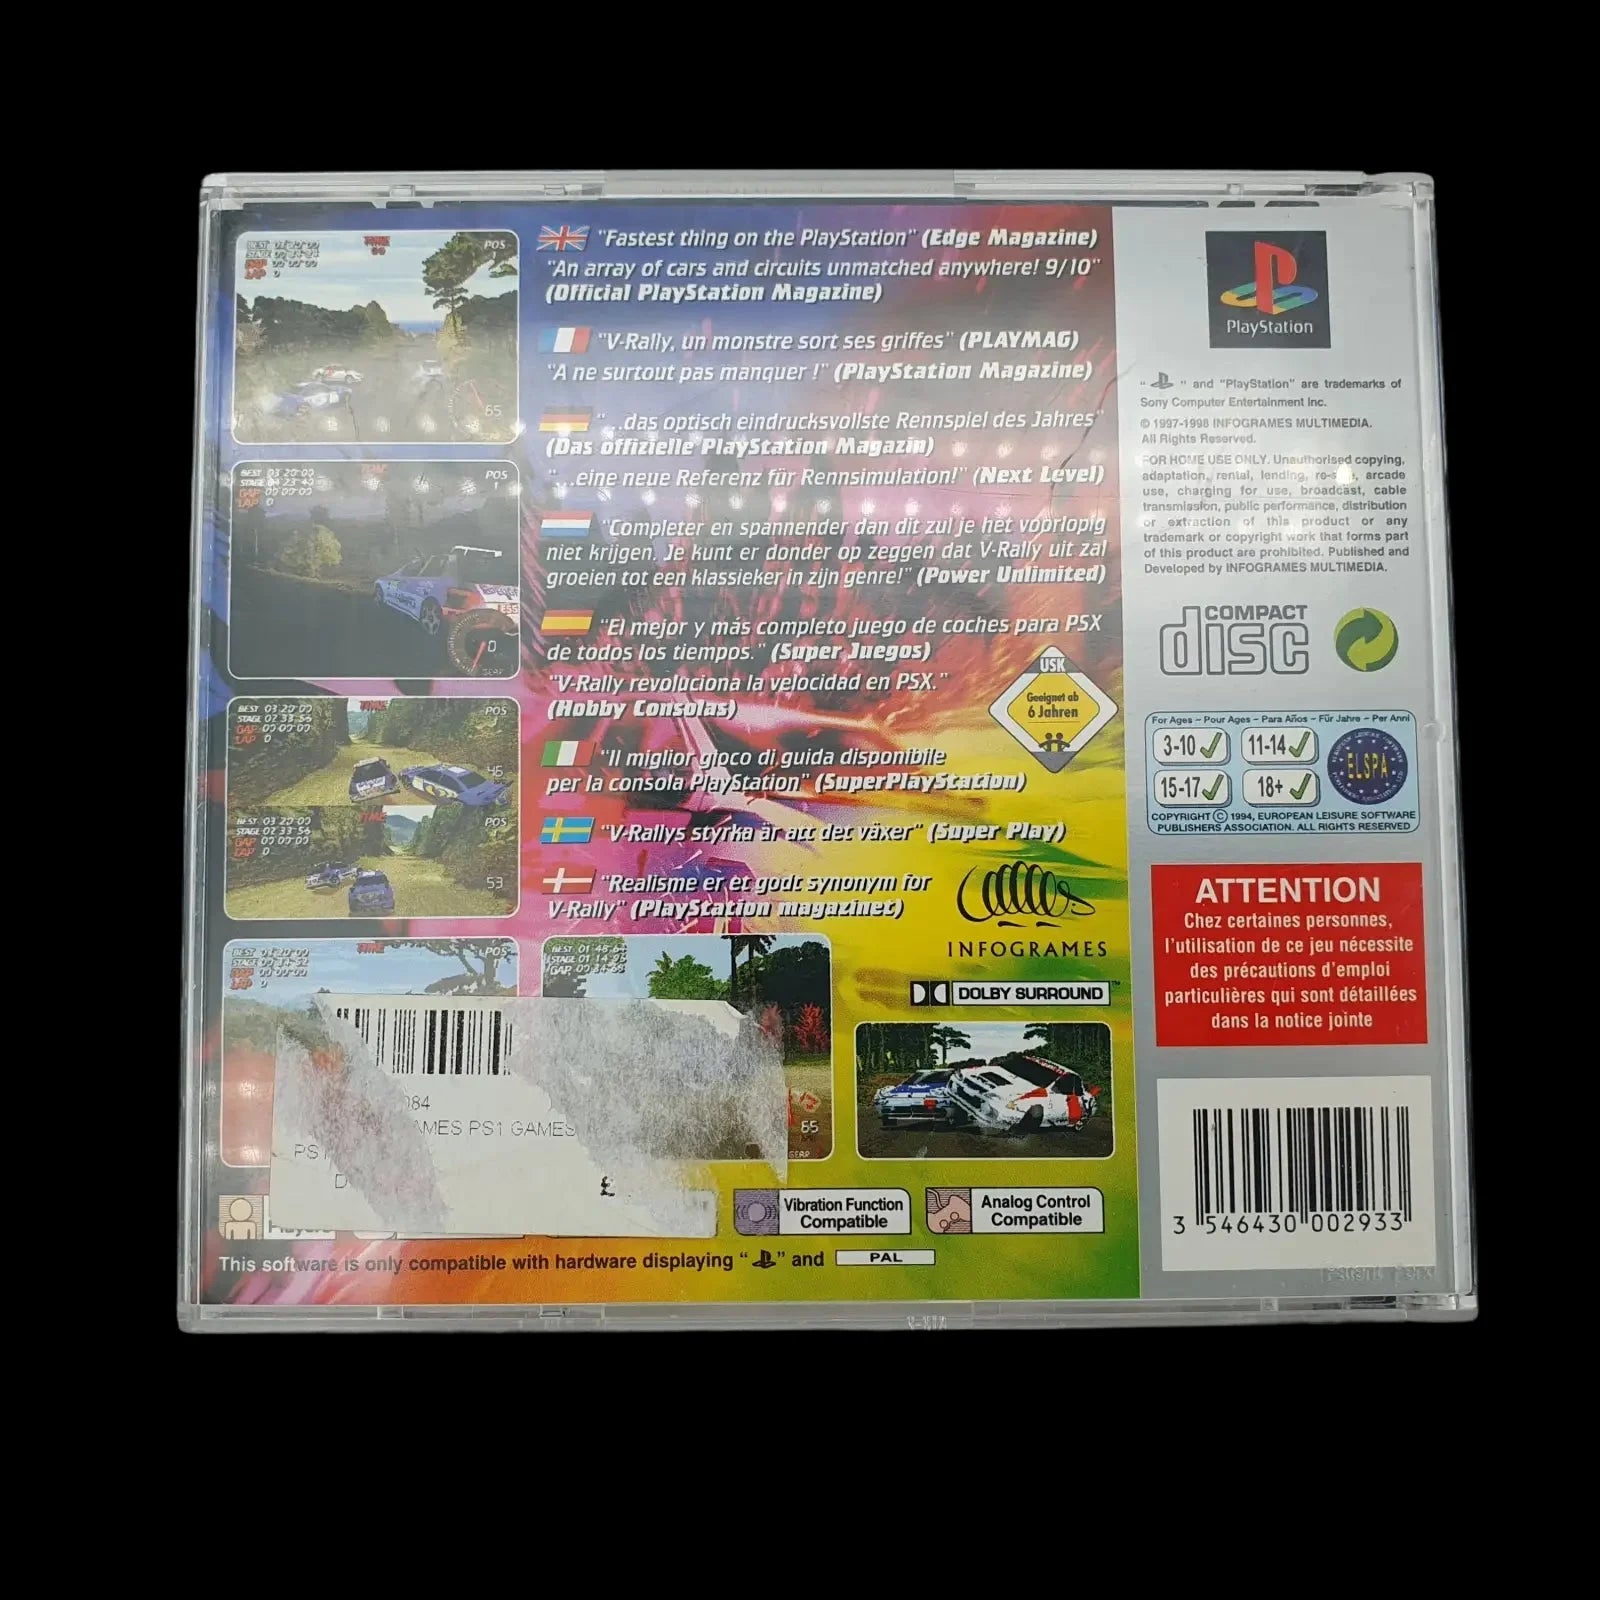 V Rally Championship Edition Playstation 1 Ps1 Infogrames